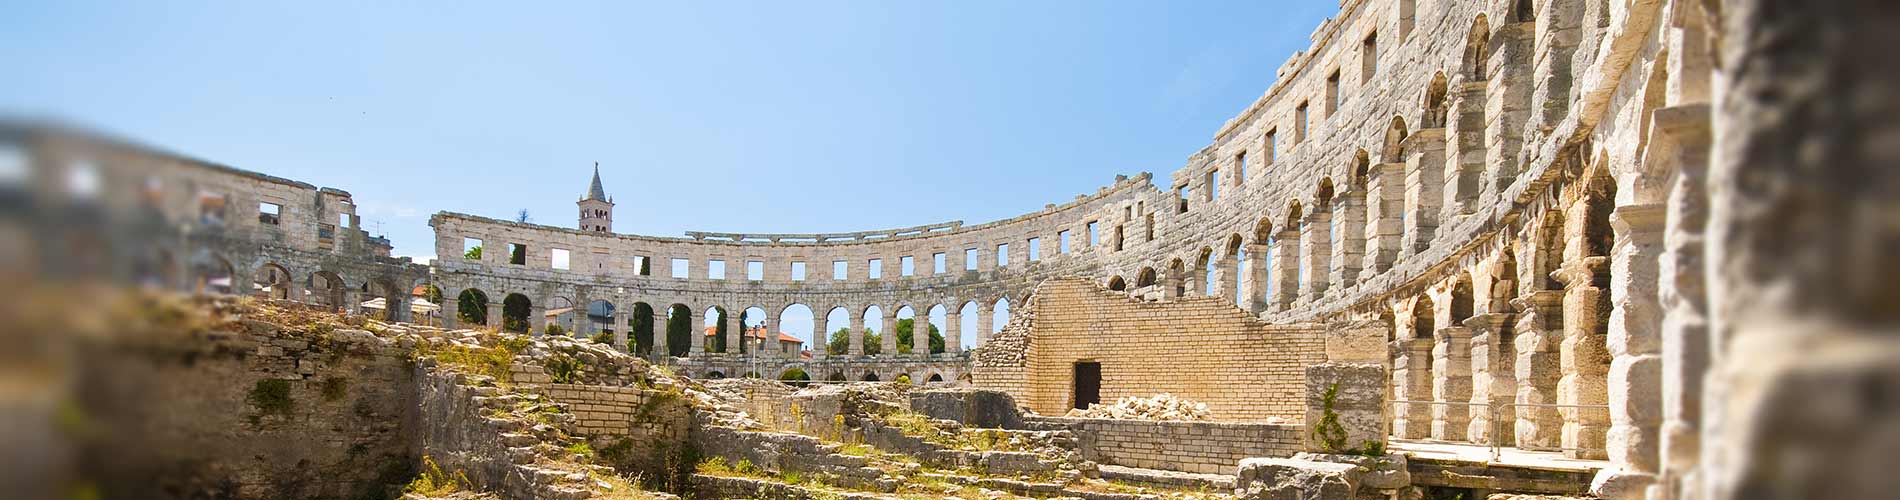 Inside the Roman amphitheater Pula Croatia.jpg